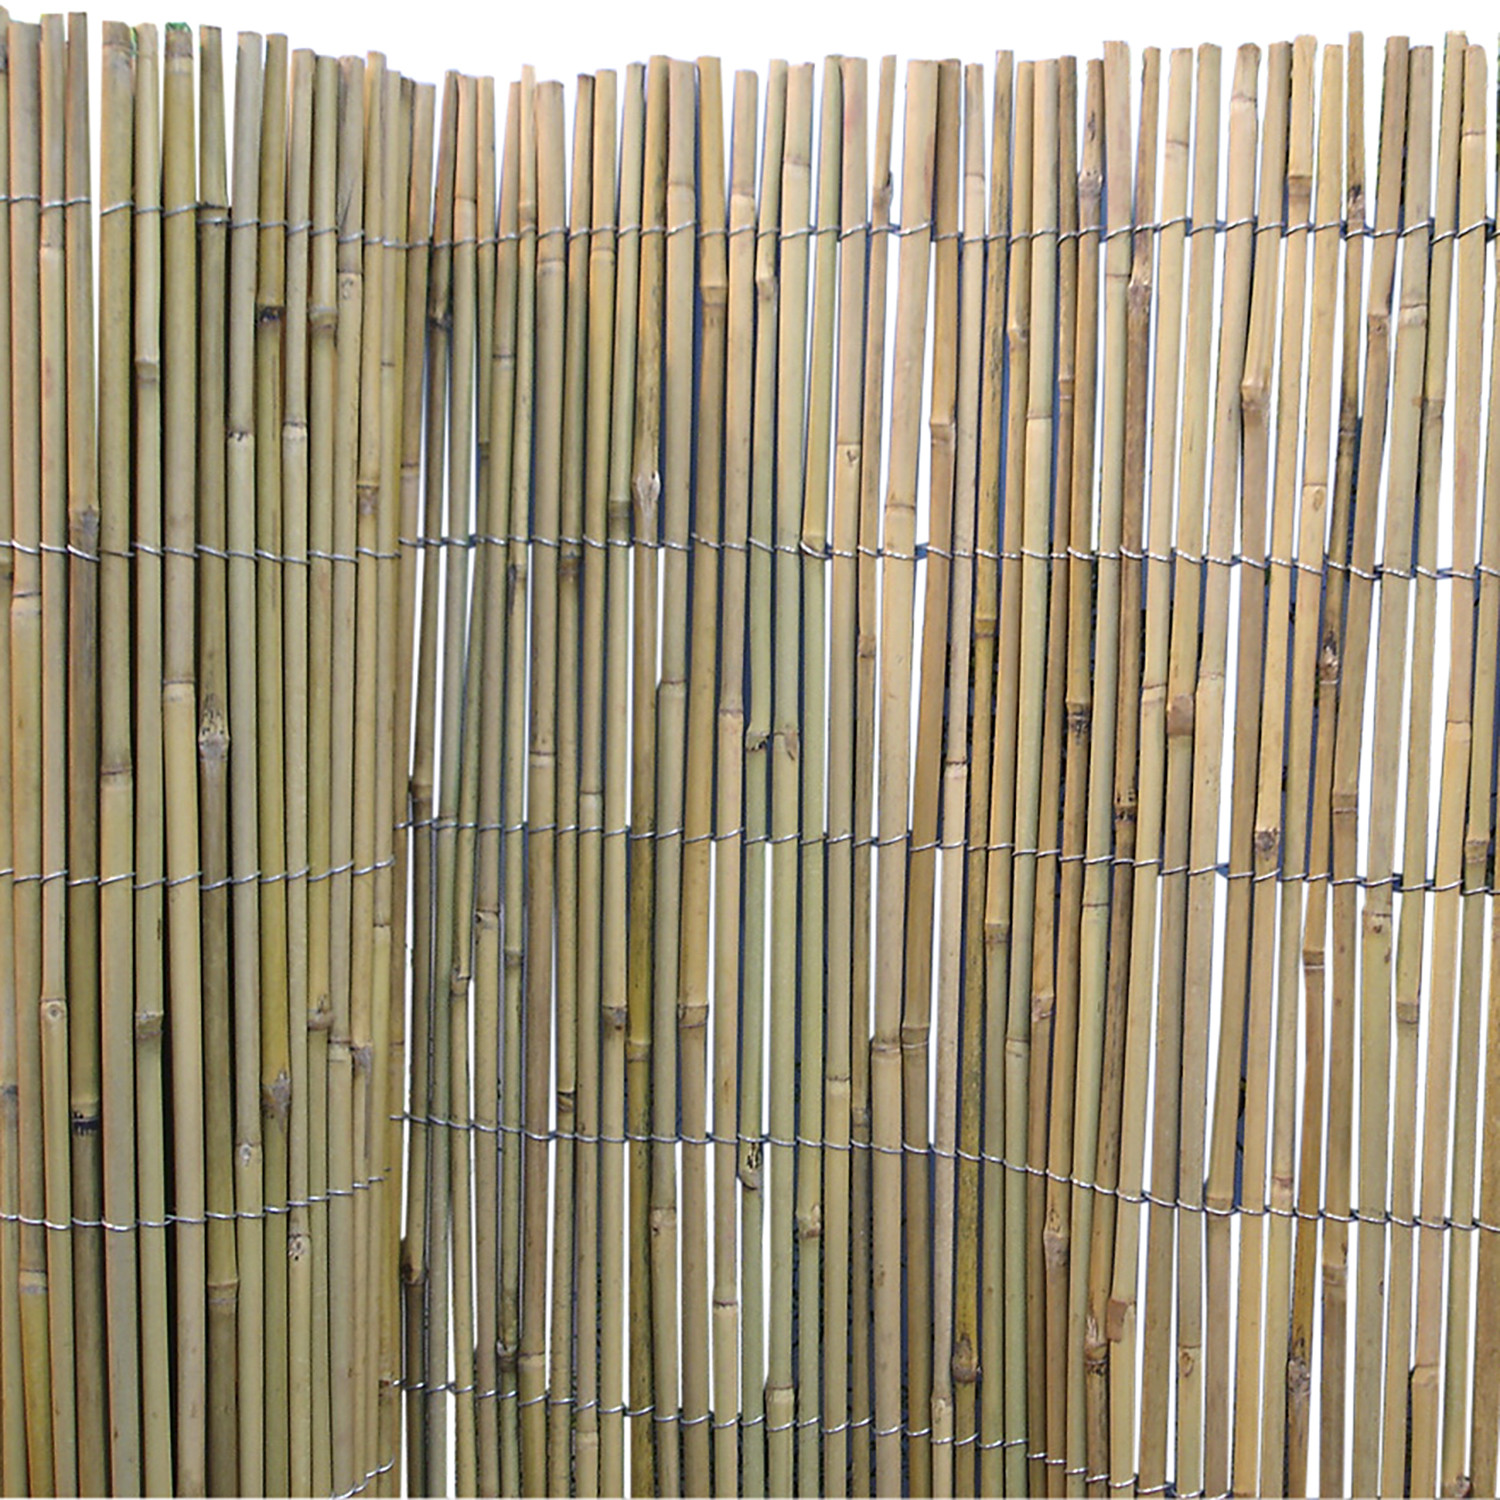 WOODSGOOD Bamboo Screening 1 x 4m Image